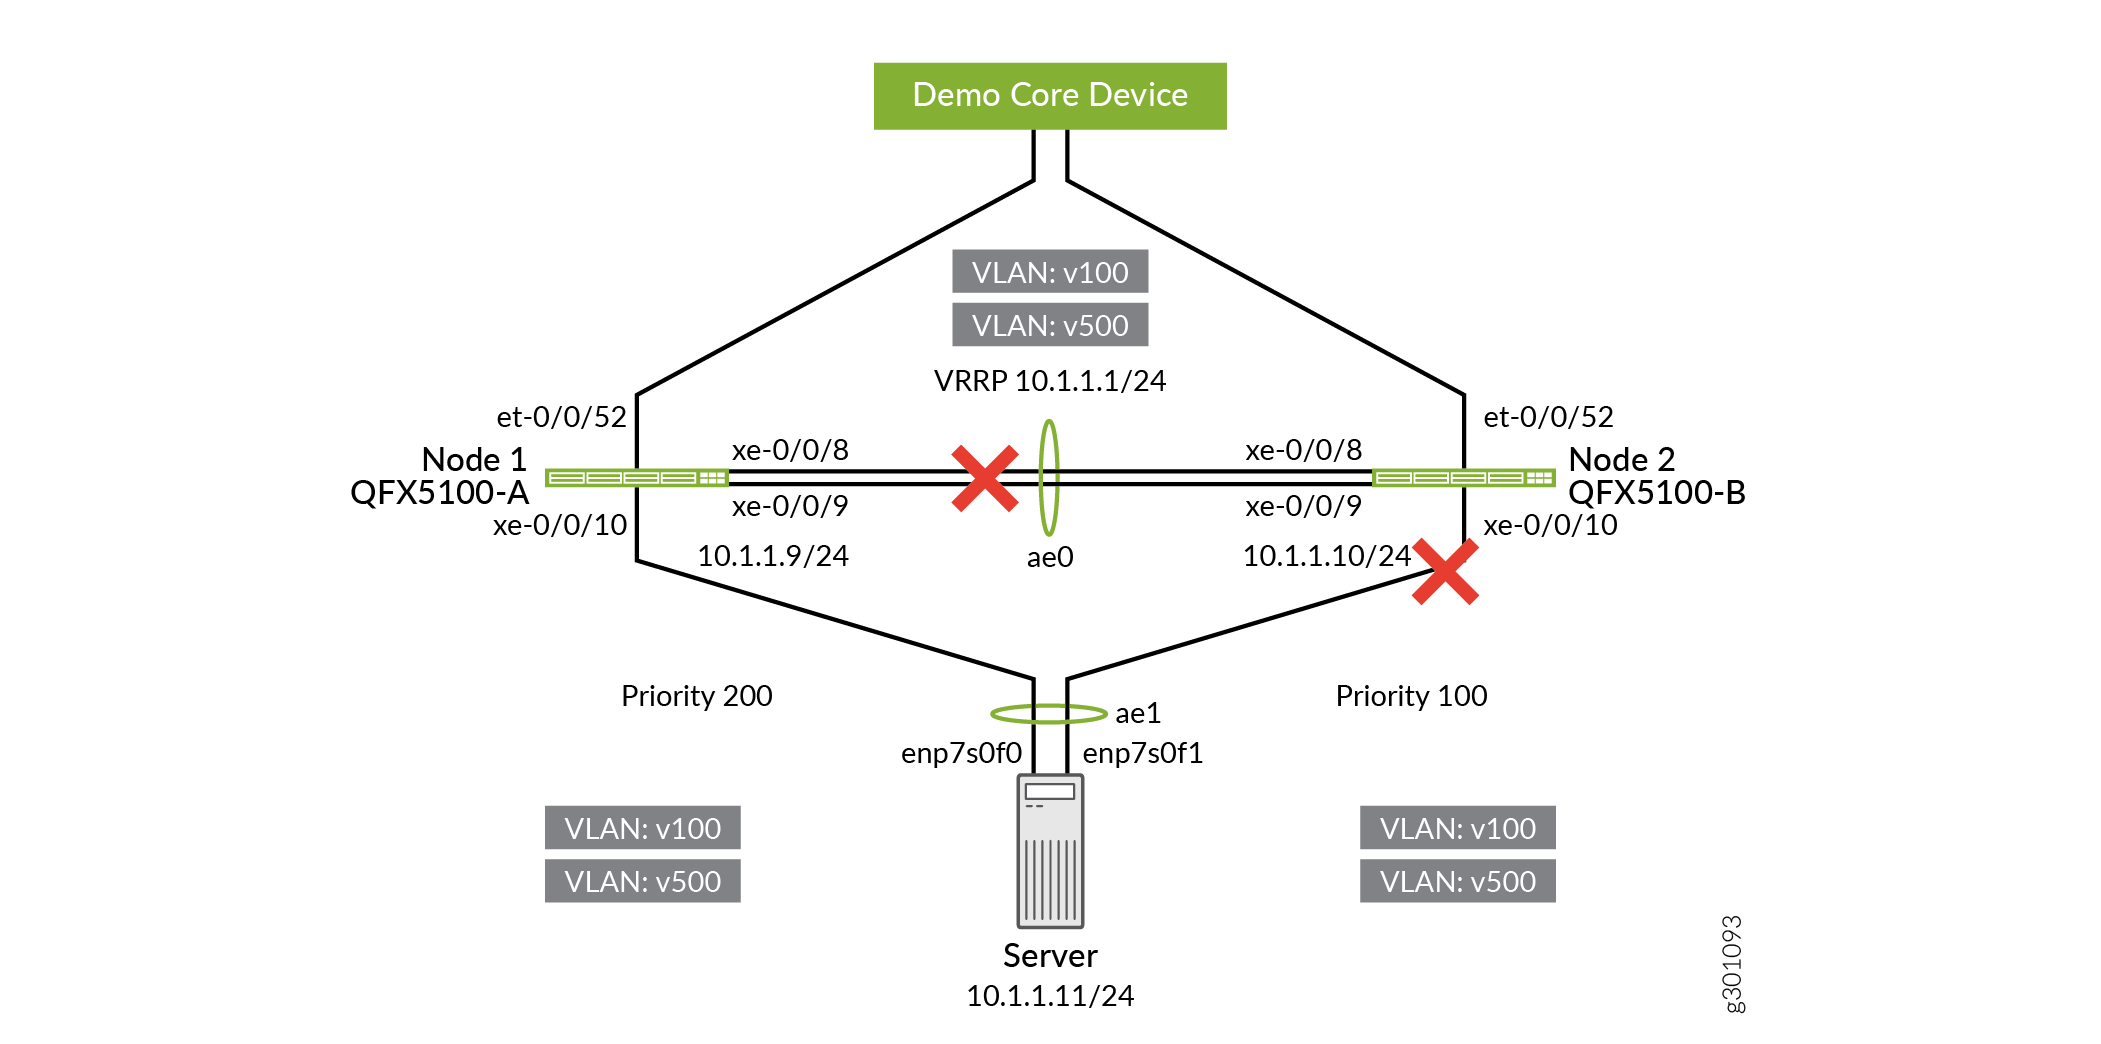 Disabling Server-Facing Interfaces on QFX5100-B